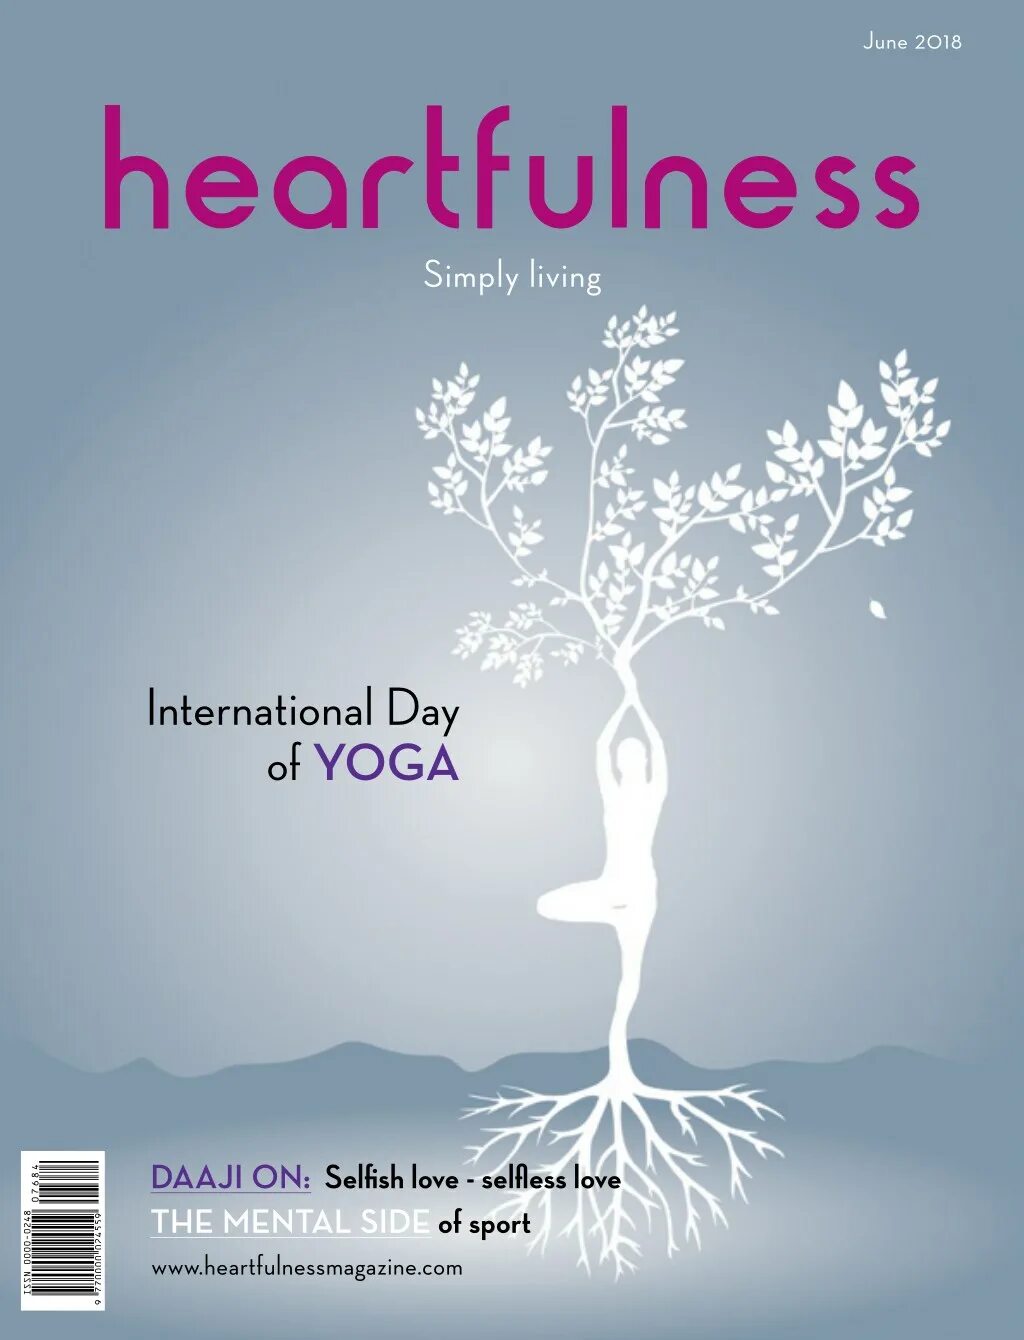 Simply living. Йога Heartfulness. Медитация Heartfulness. Heartfulness Magazine. Институт медитации Heartfulness.